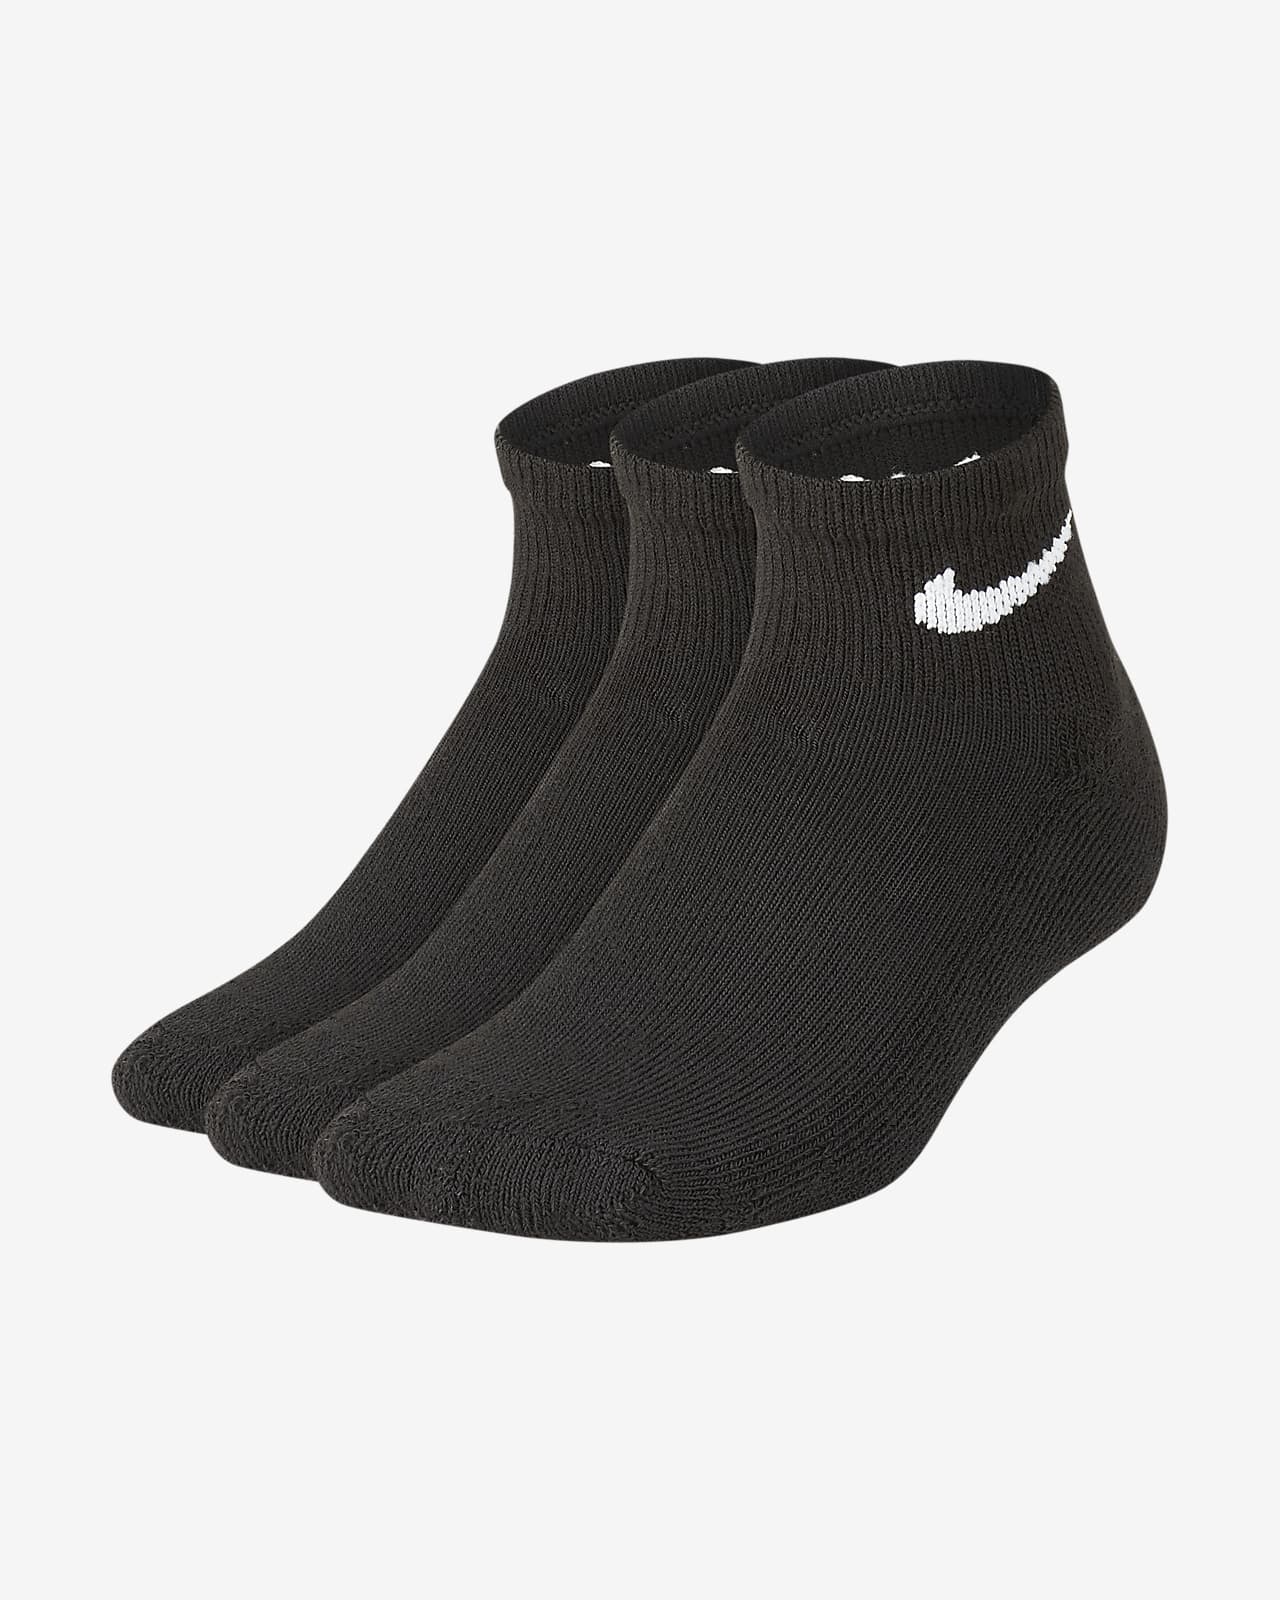 Nike Little Kids' Cushioned Ankle Socks (3 Pairs)